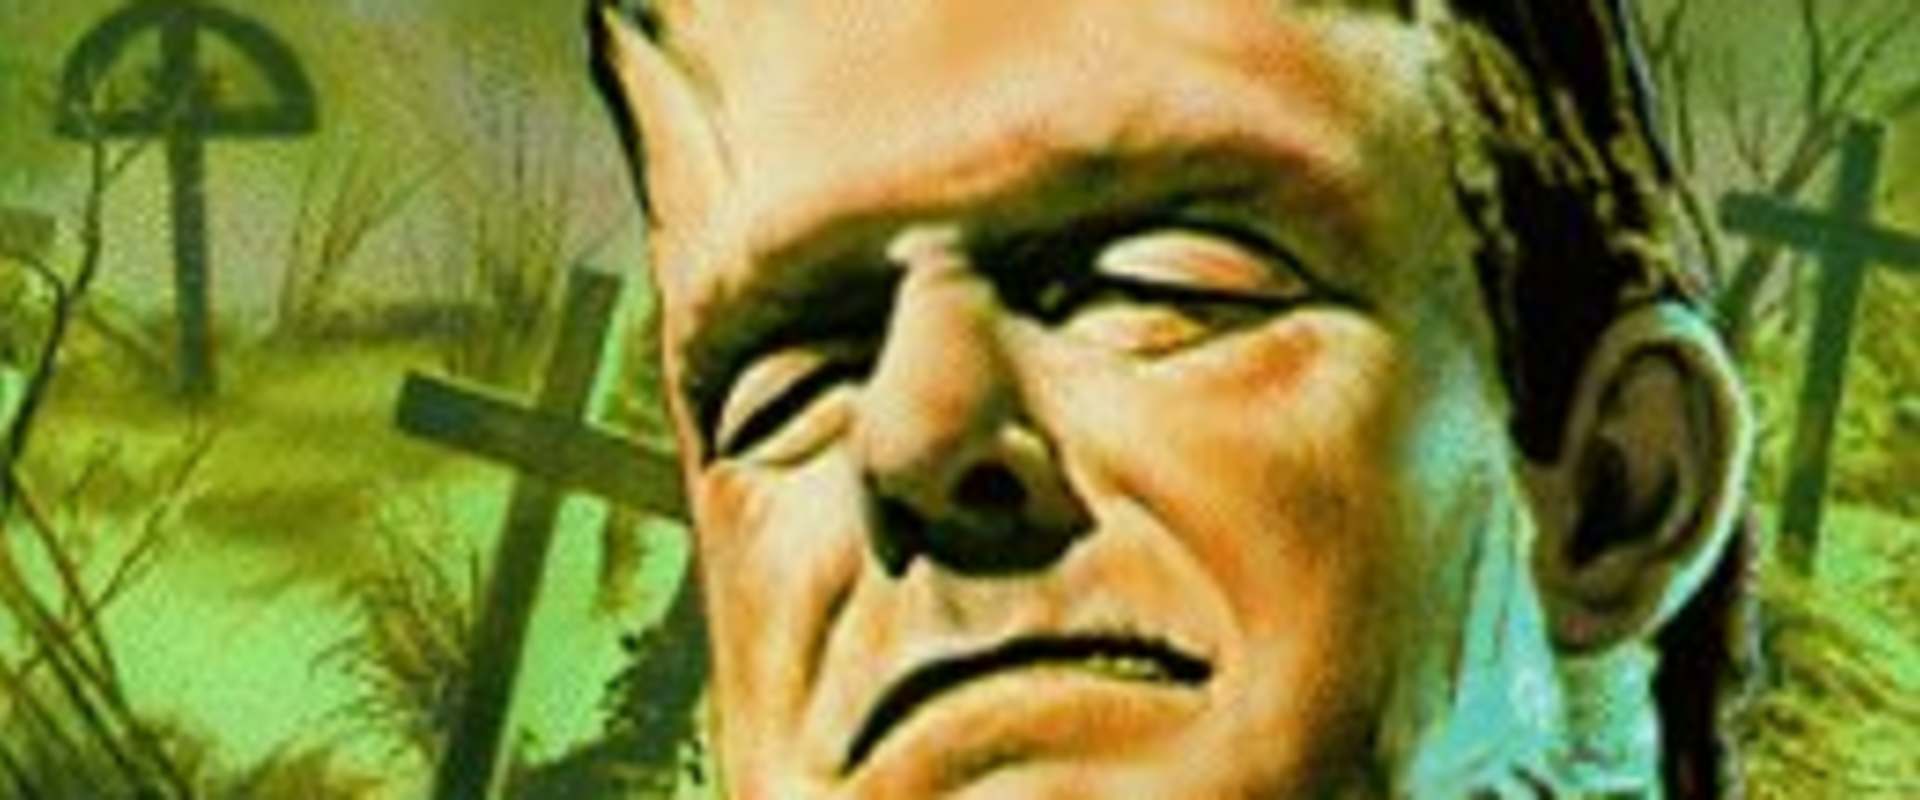 The Ghost of Frankenstein background 2